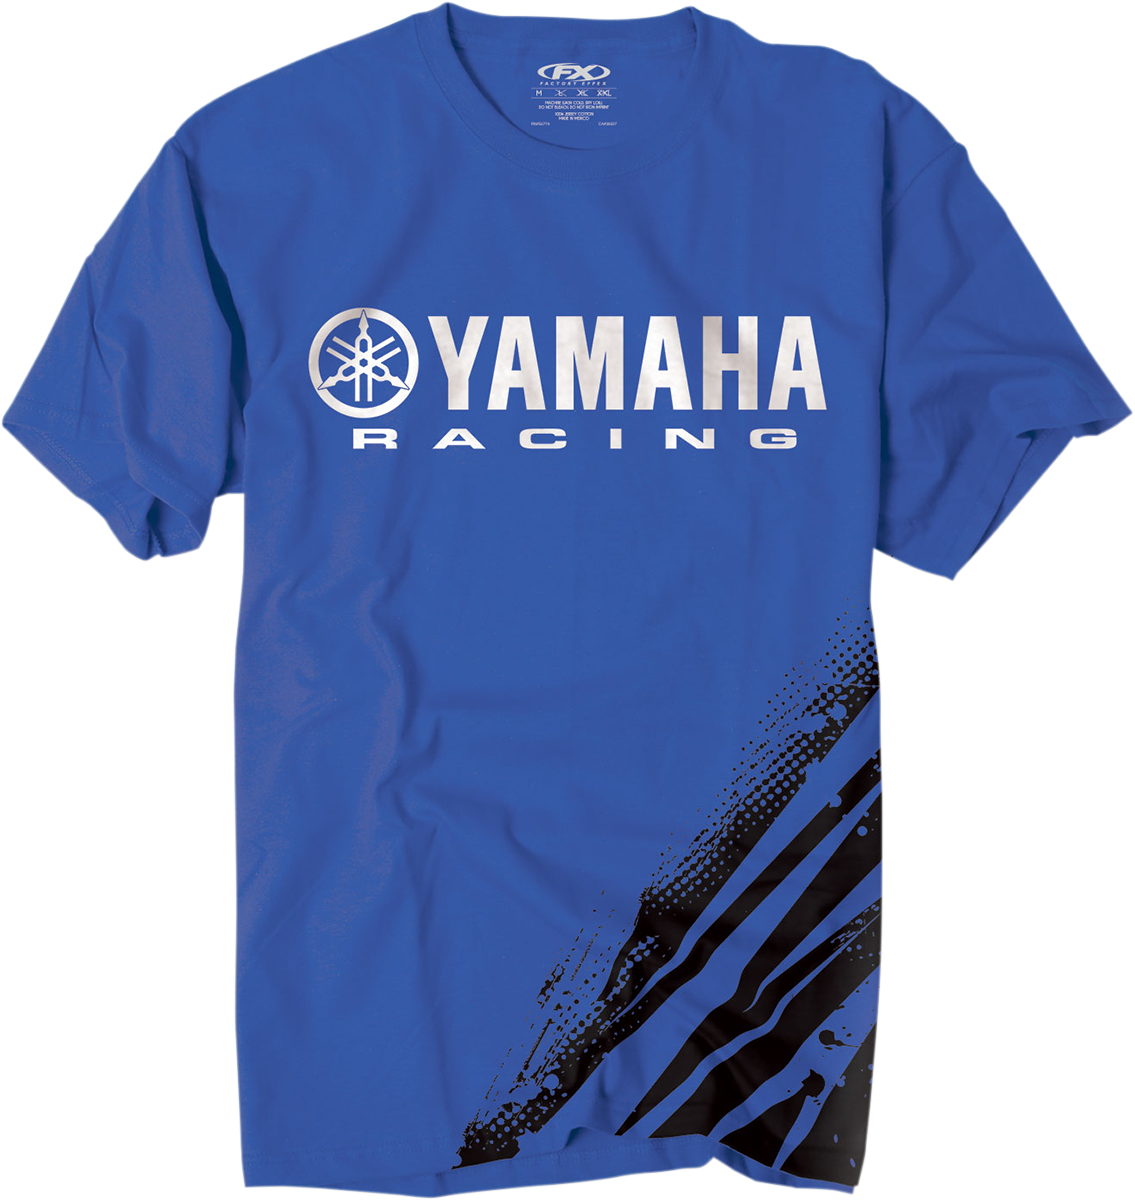 FACTORY EFFEX Yamaha Racing Flare T-Shirt - Blue - XL 14-88184